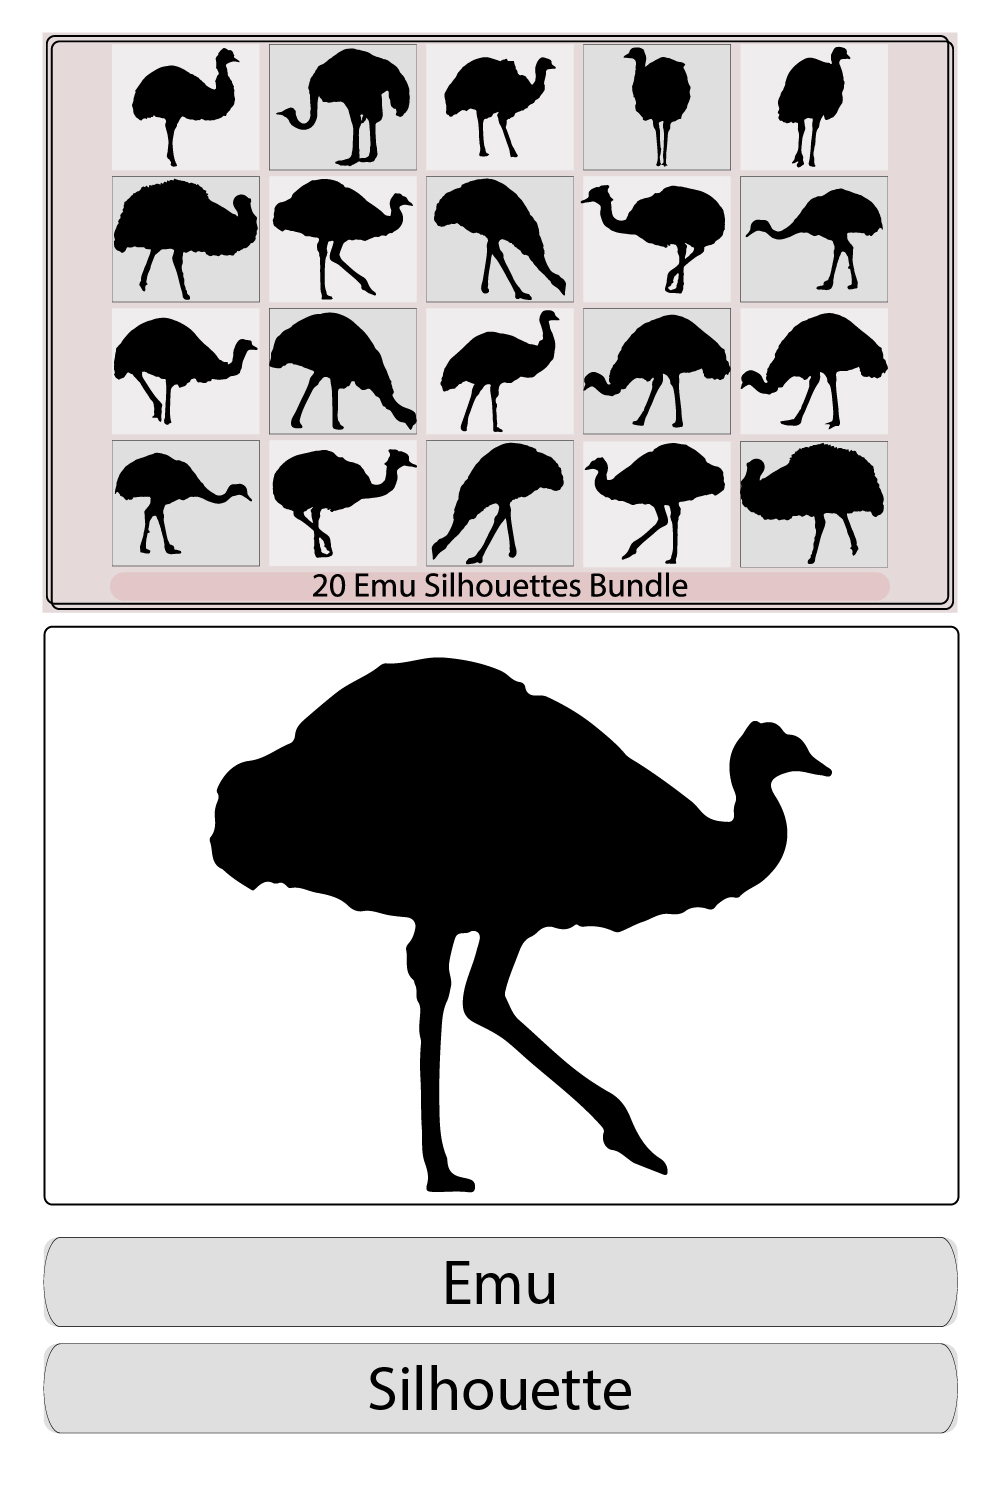 Emu silhouette,Emu vector silhouette, Emu bird,silhouette of emu,Emu bird vector silhouette pinterest preview image.